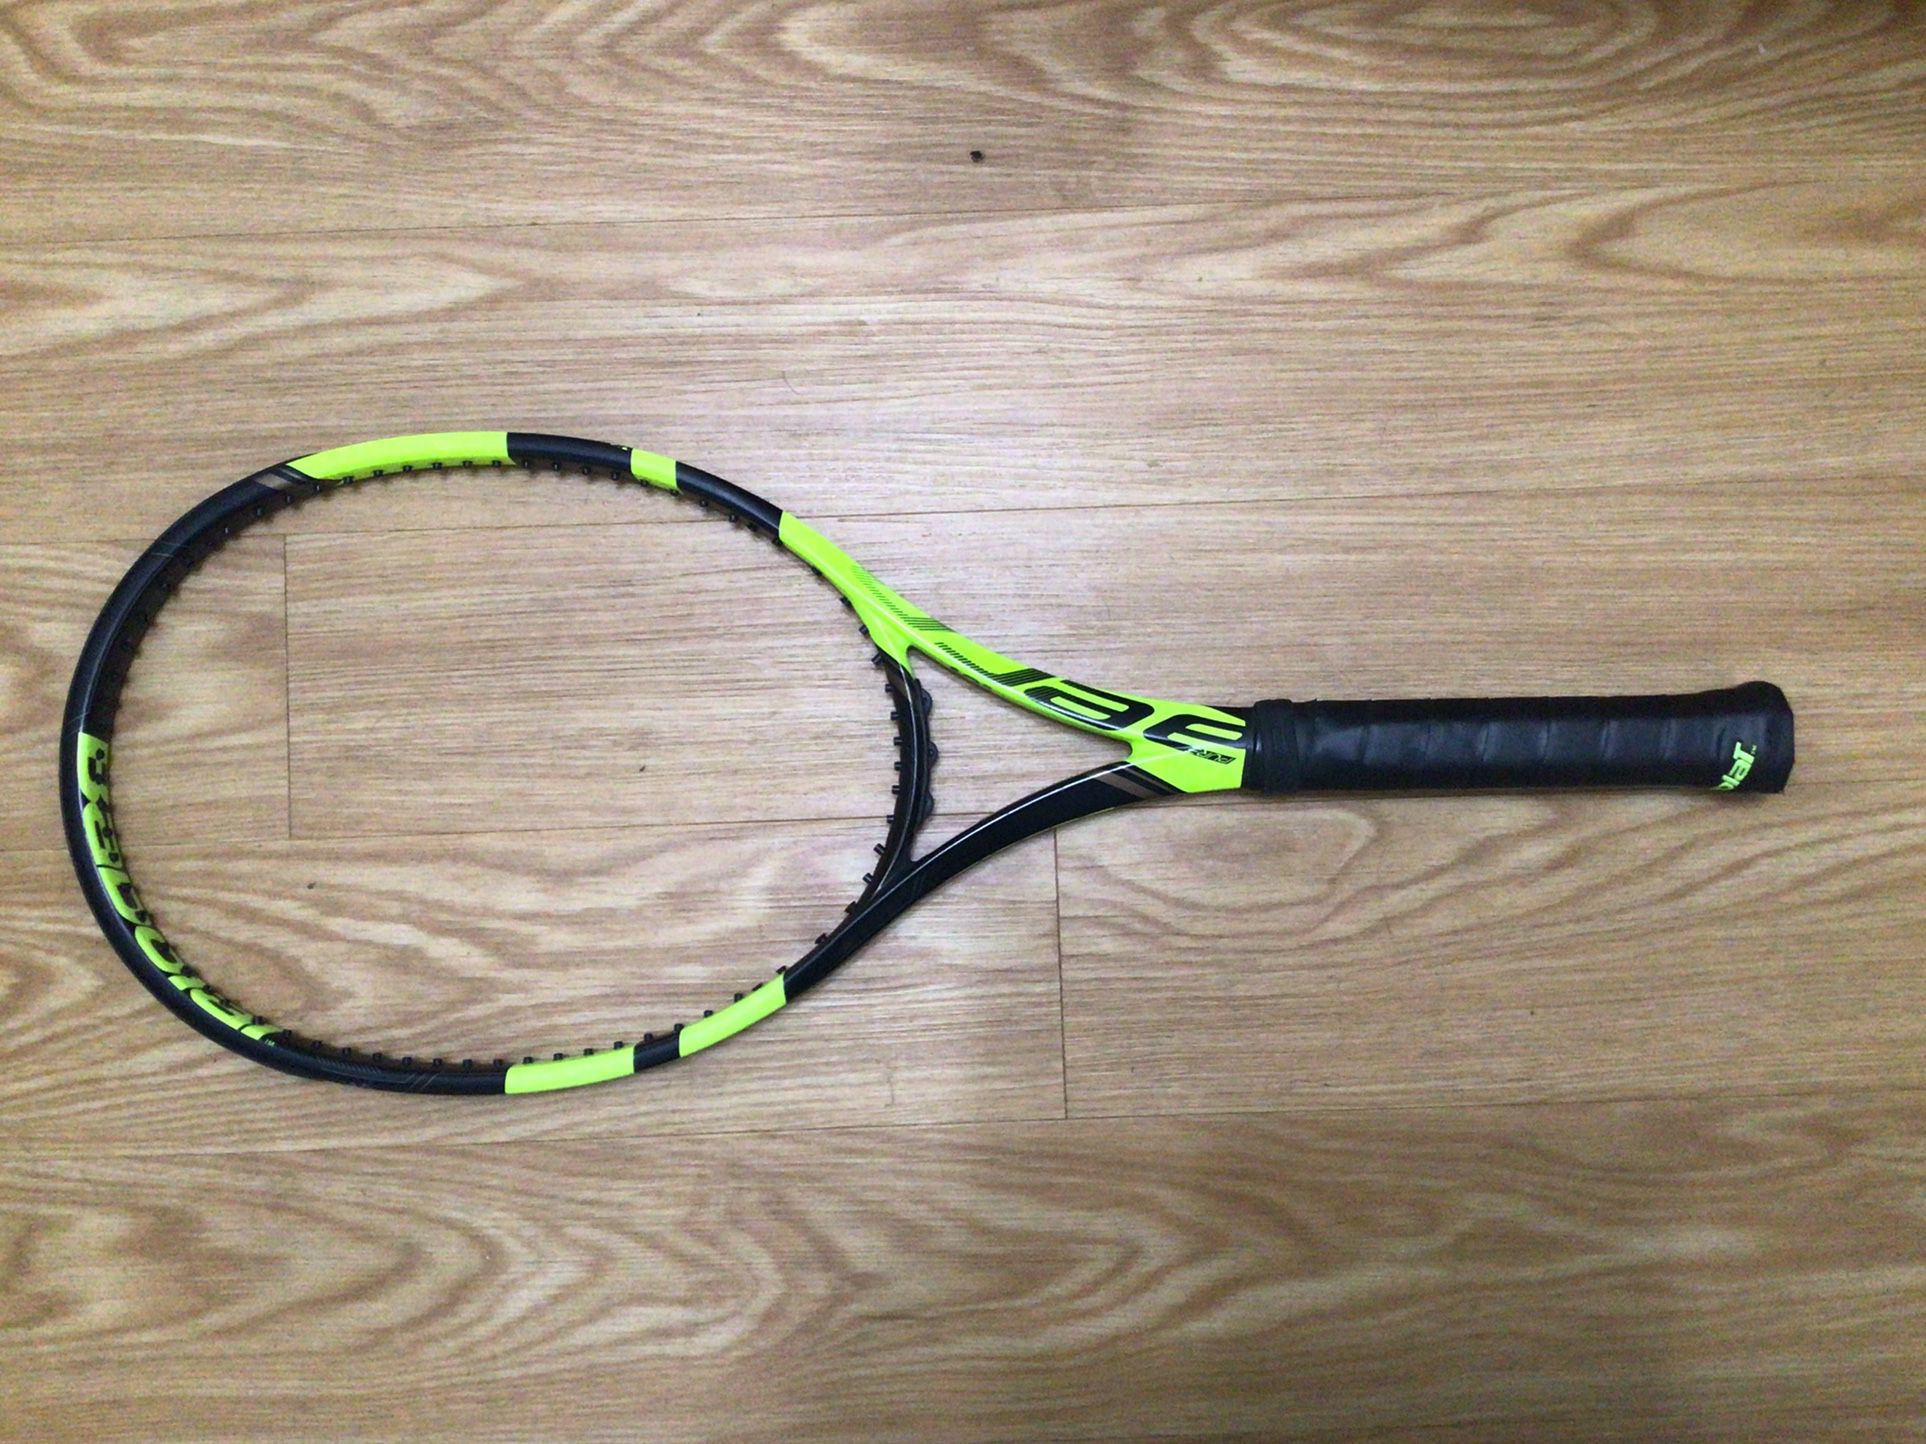 Babolat Pure Aero VS Tour Tennis Racket 98 sq in head size, 4-12” grip